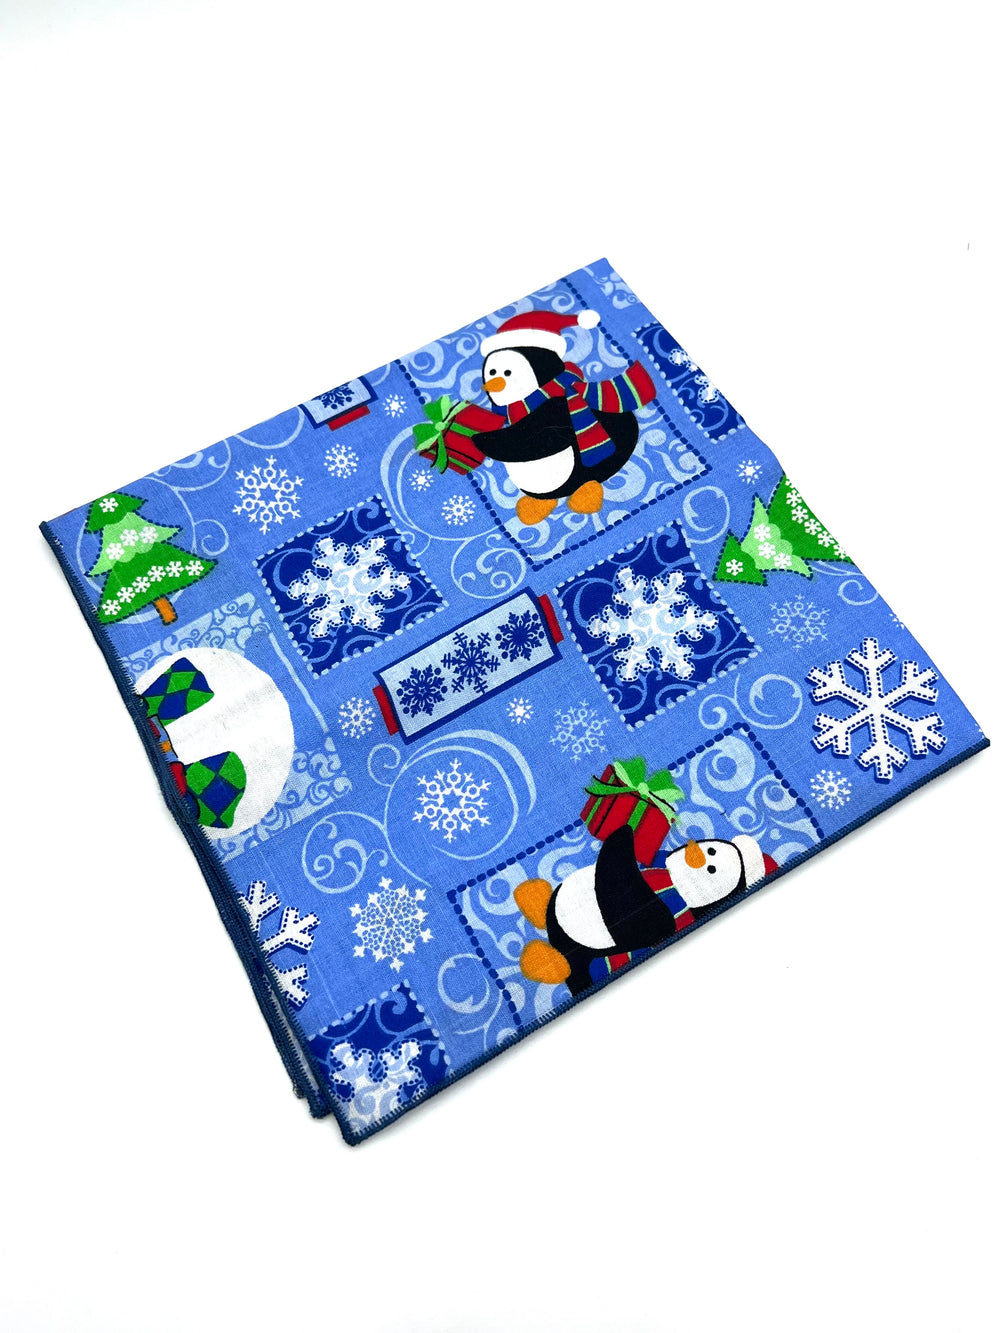 The Holidays Handkerchief